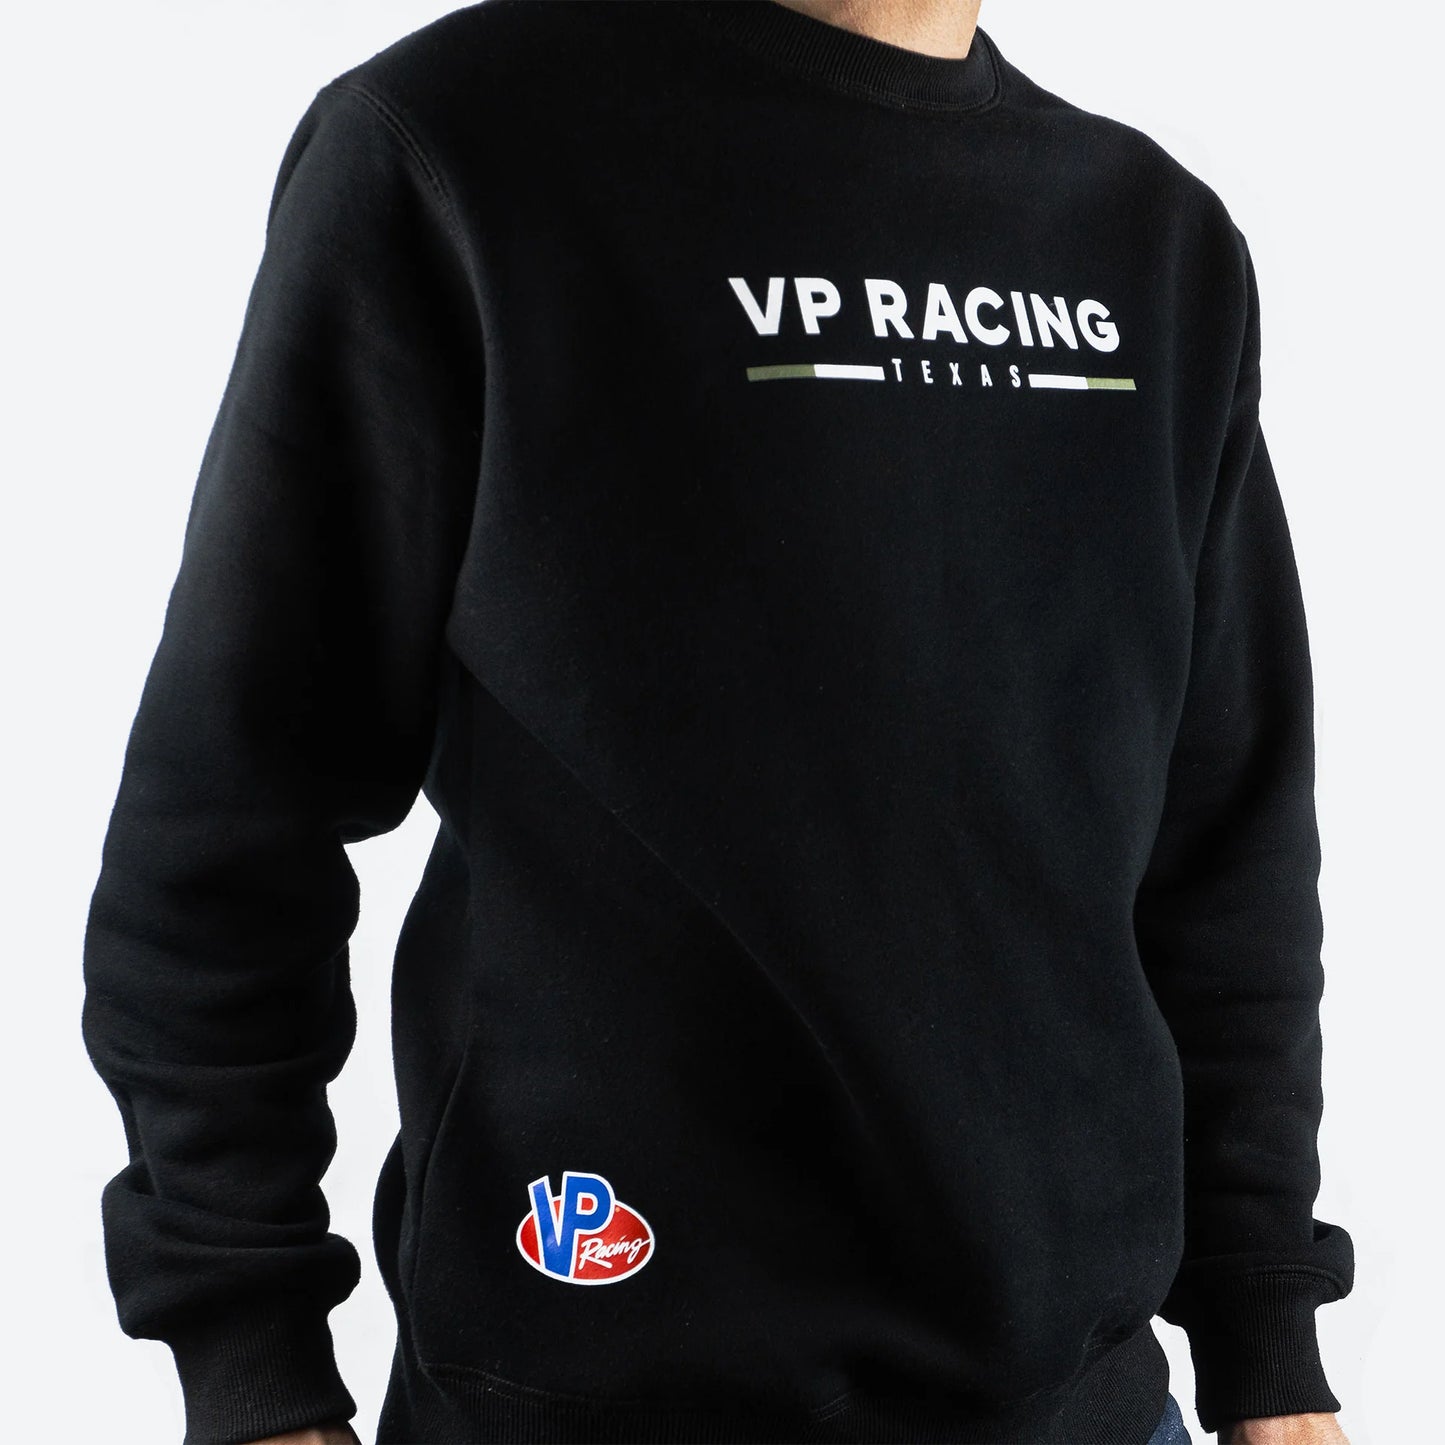 VP Racing Texas Sweatshirt